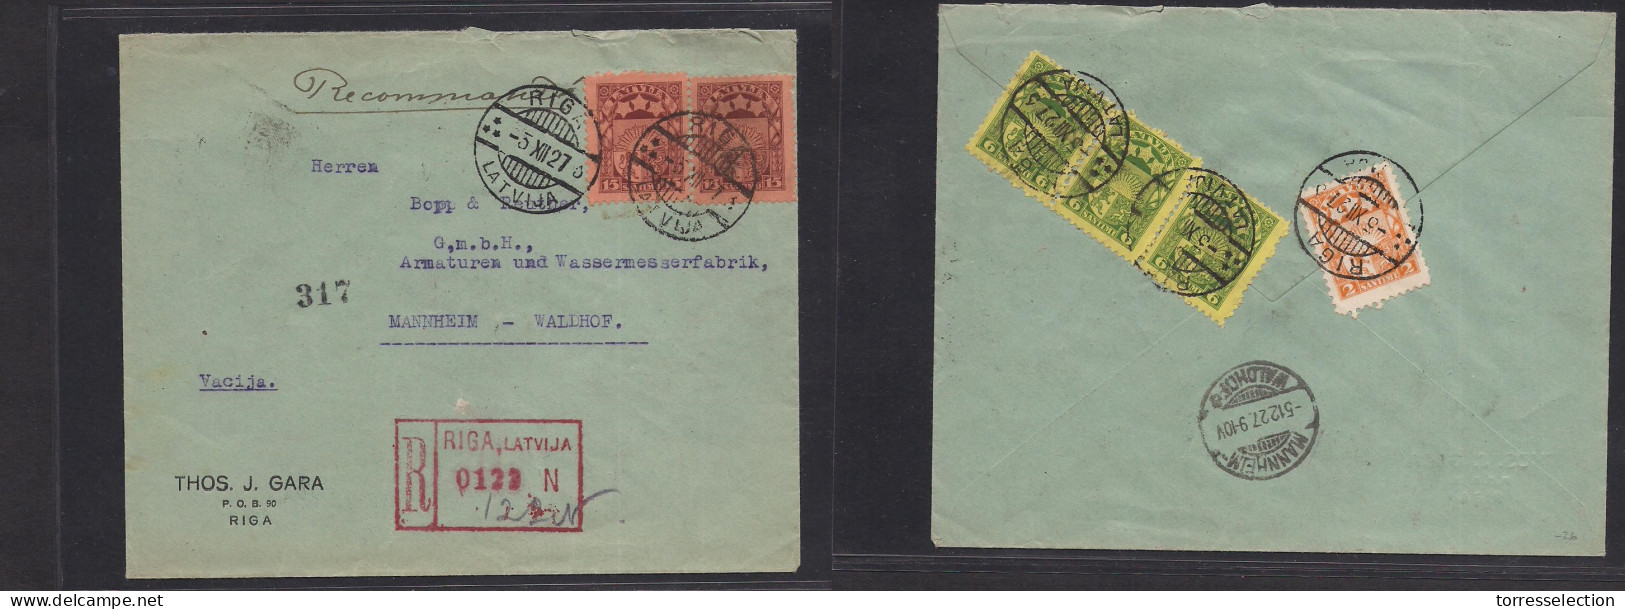 LATVIA. 1927 (3 Dec) Riga - Germany, Mannheim (5 Dec) Registered Front + Reverse Envelope. VF. XSALE. - Latvia